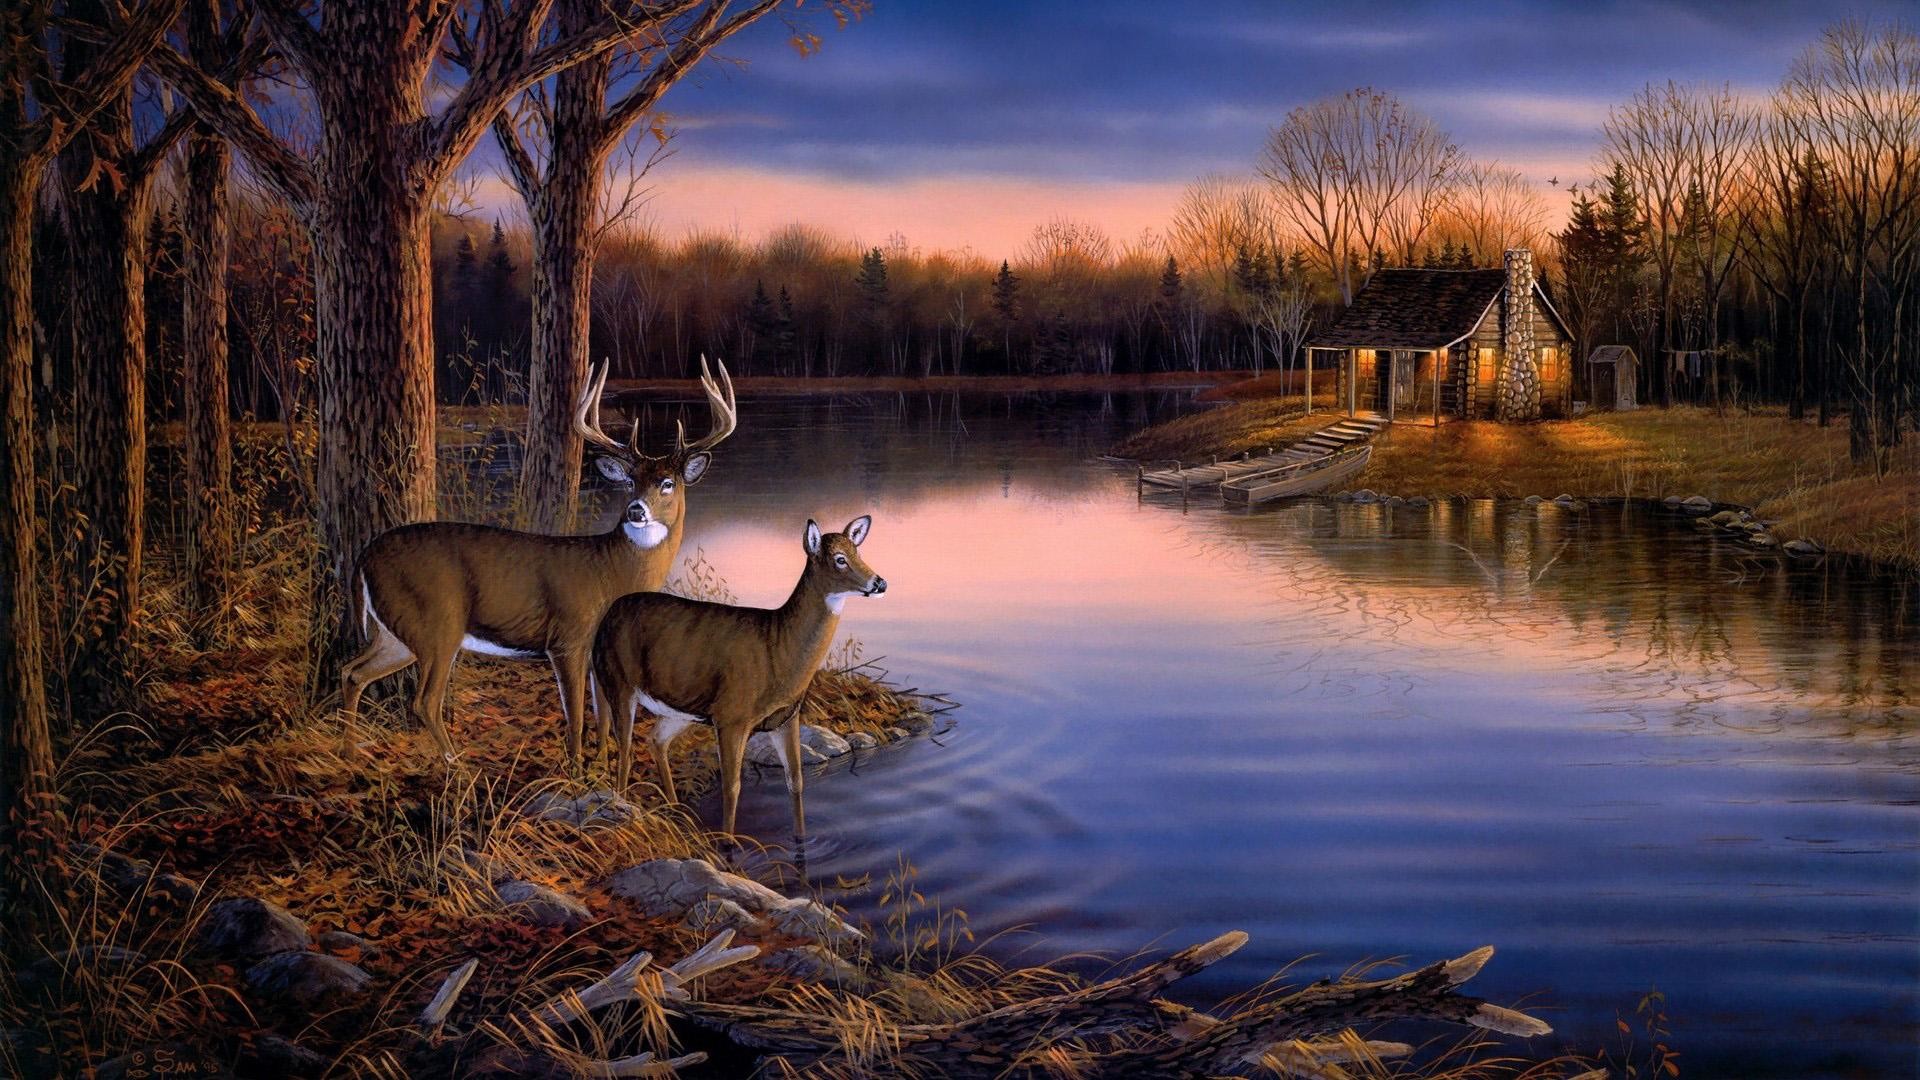 1920x1080 Deer Hunting Wallpaper Border | ... ,landscape wallpaper Picture   1080p hd wallpaper